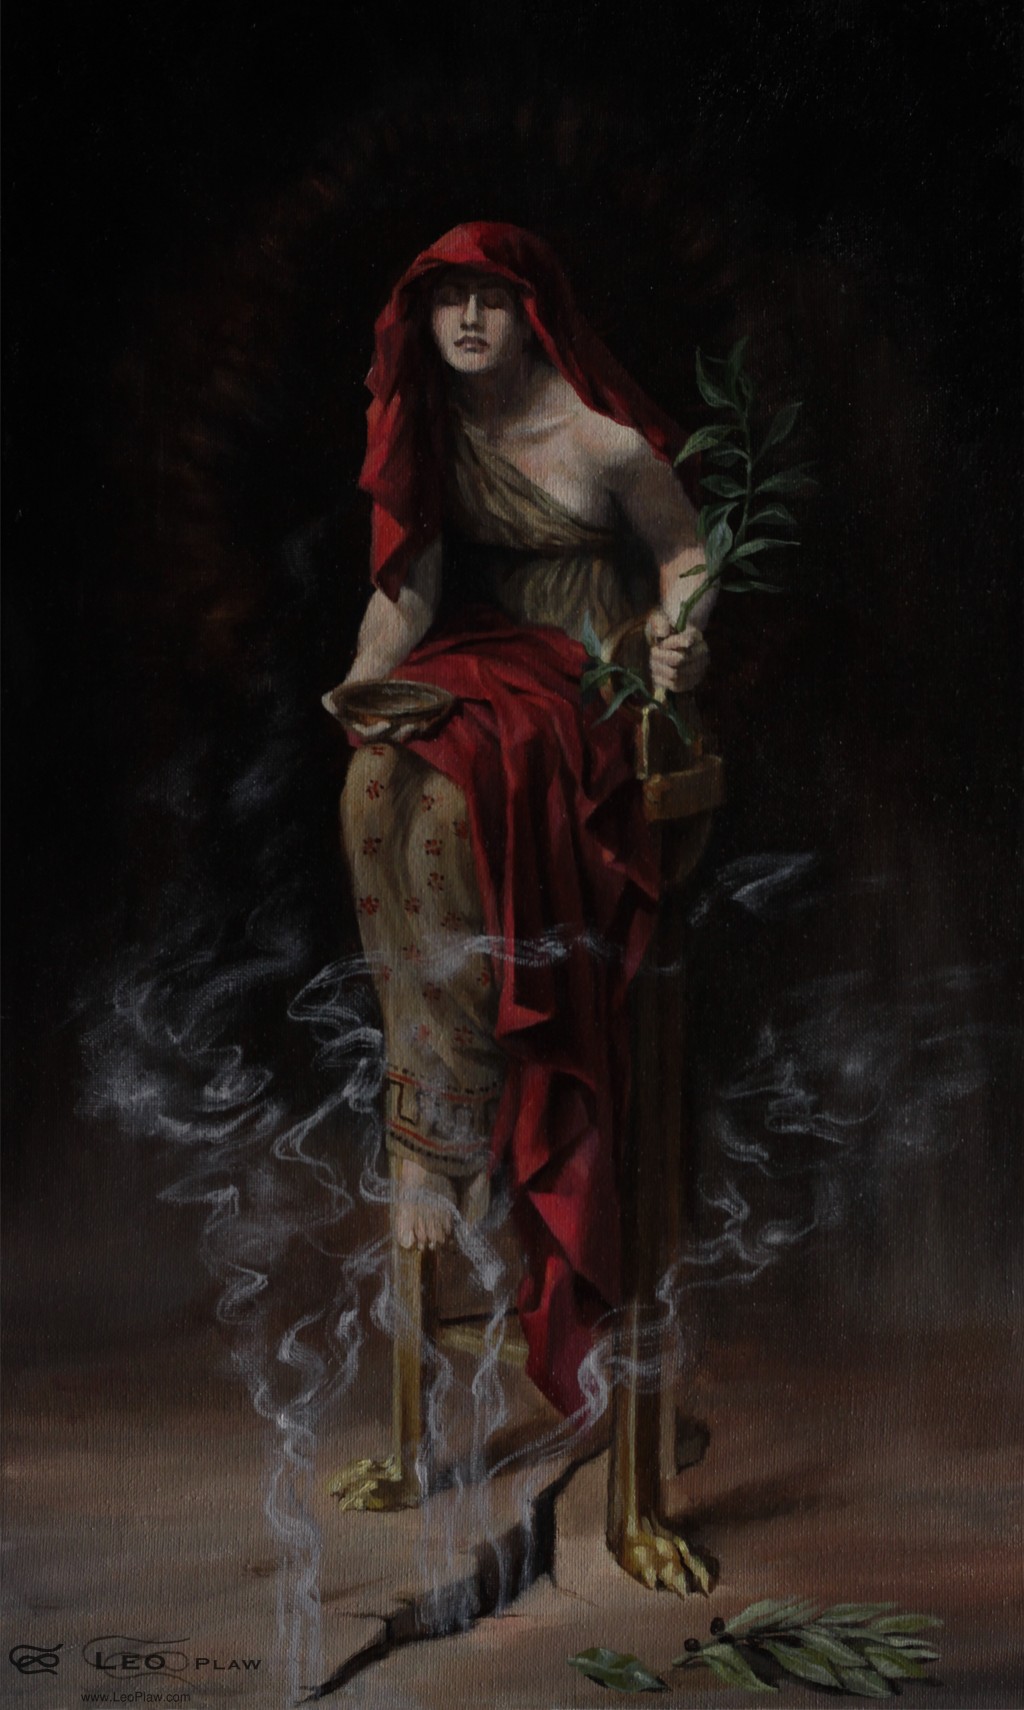 "Oracle of Delphi", Leo Plaw, 30 x 50cm, oil on canvas study of John Collier's "Priestess of Delphi"